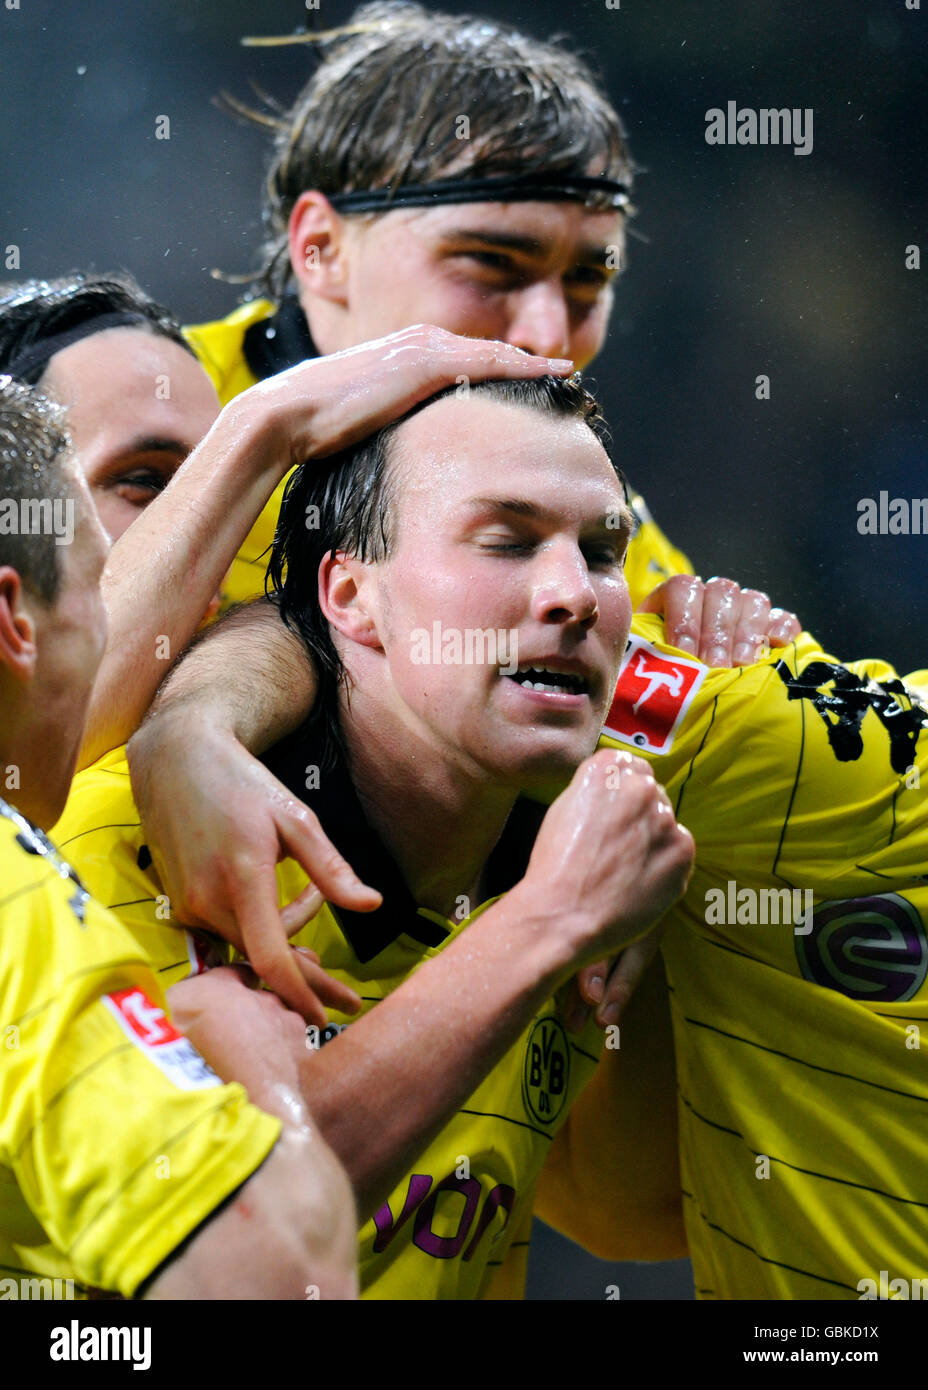 Kevin Grosskreutz celebrating his goal to 0:2 with Marcel Schmelzer, Bayer Leverkusen - Borussia Dortmund 1:3 Stock Photo